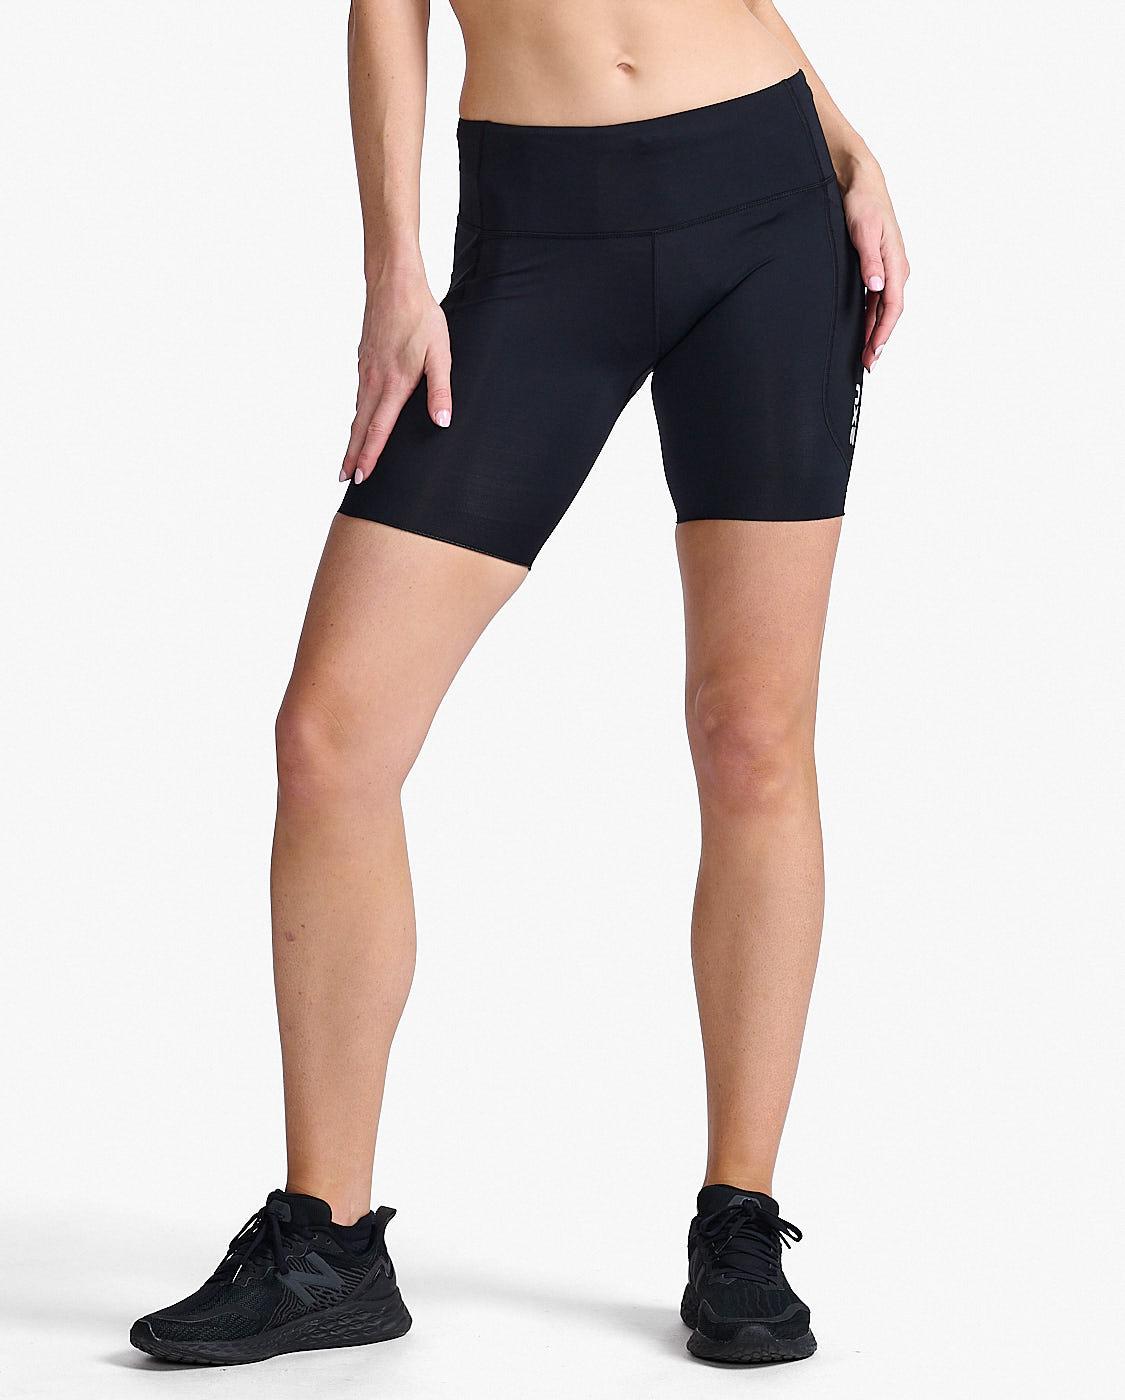 2xu Womens Aero Mid-rise Compression 6 Inch Shorts - Black/silver Reflective